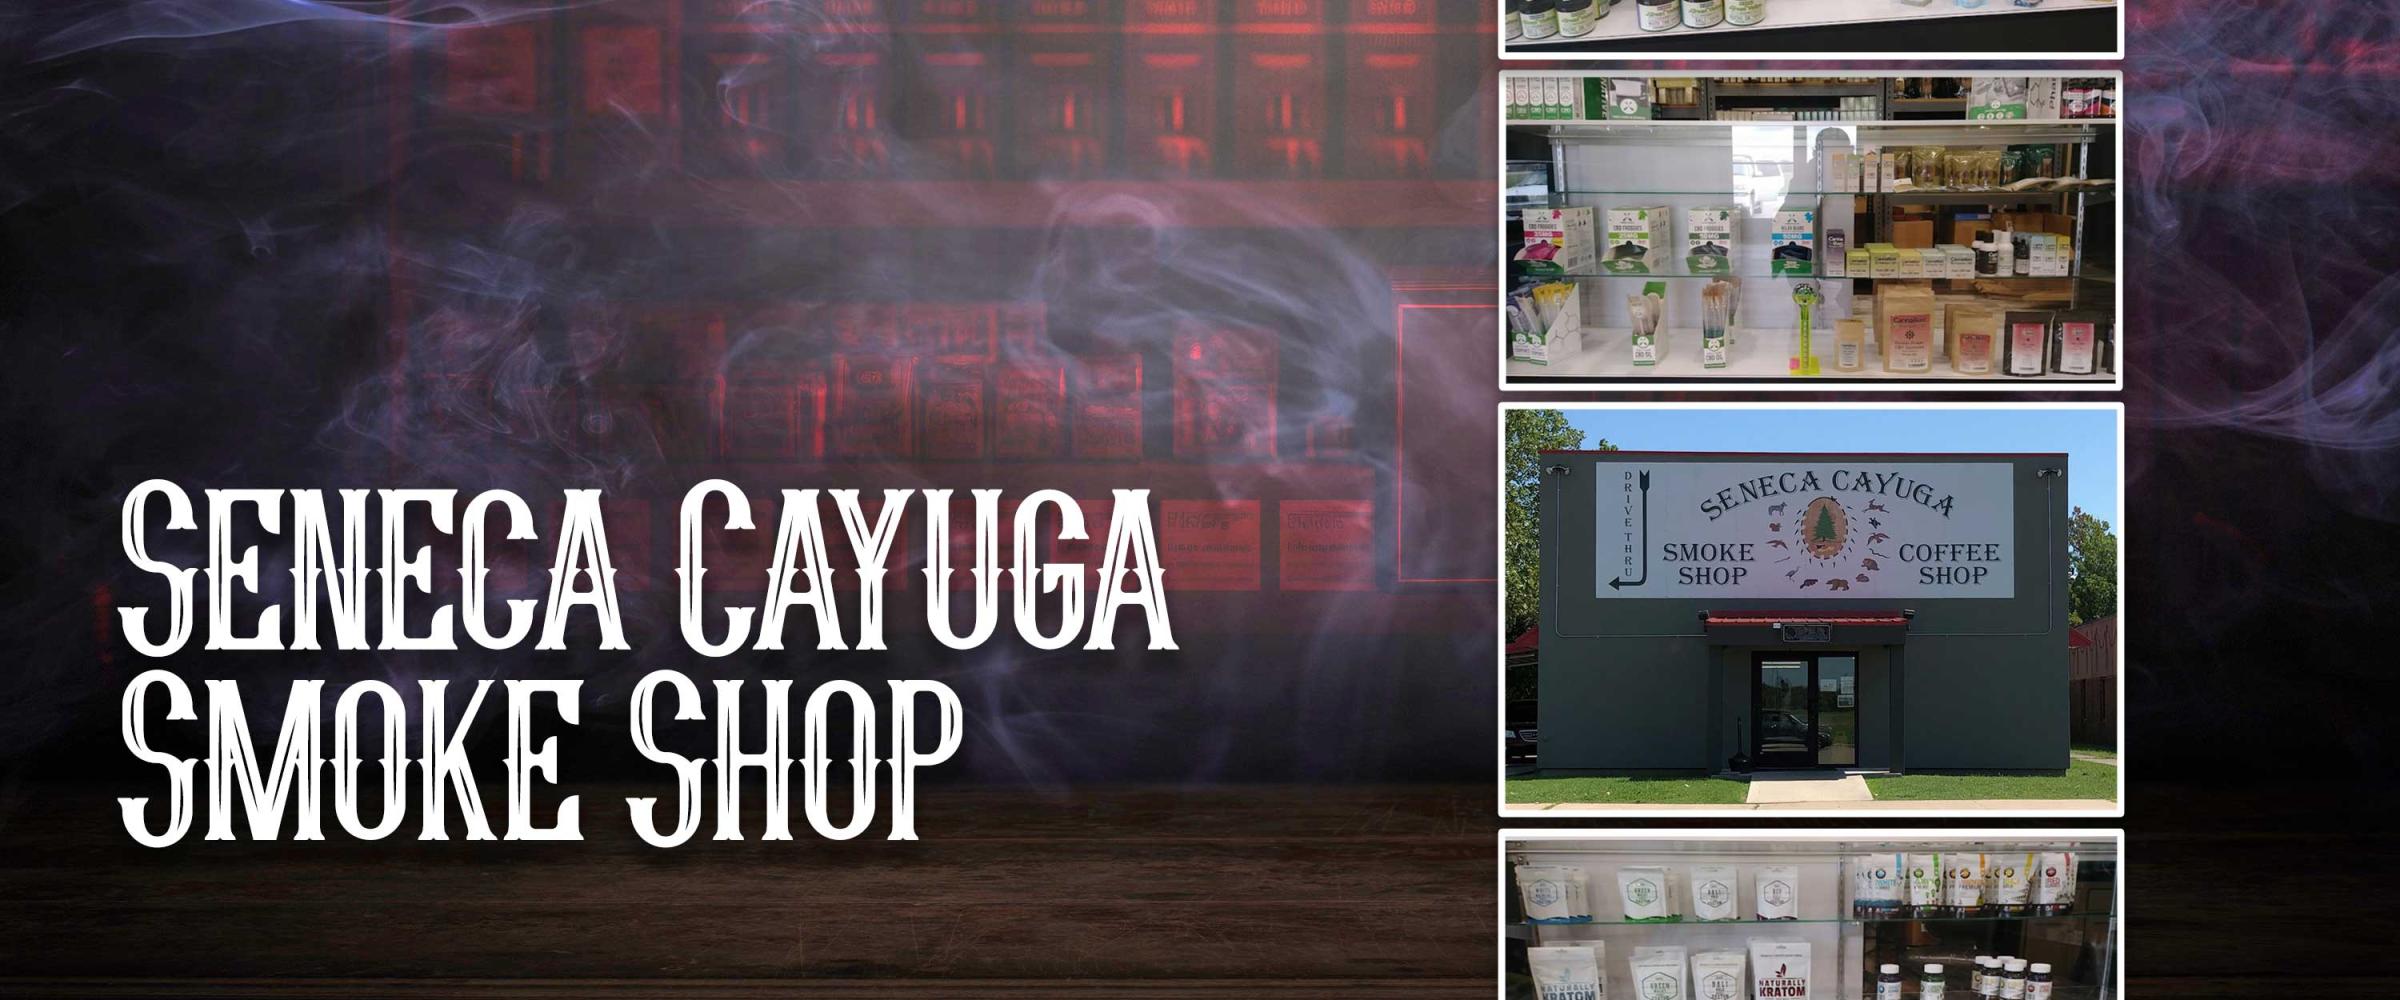 Photos of the Seneca Cayuga Smoke Shop